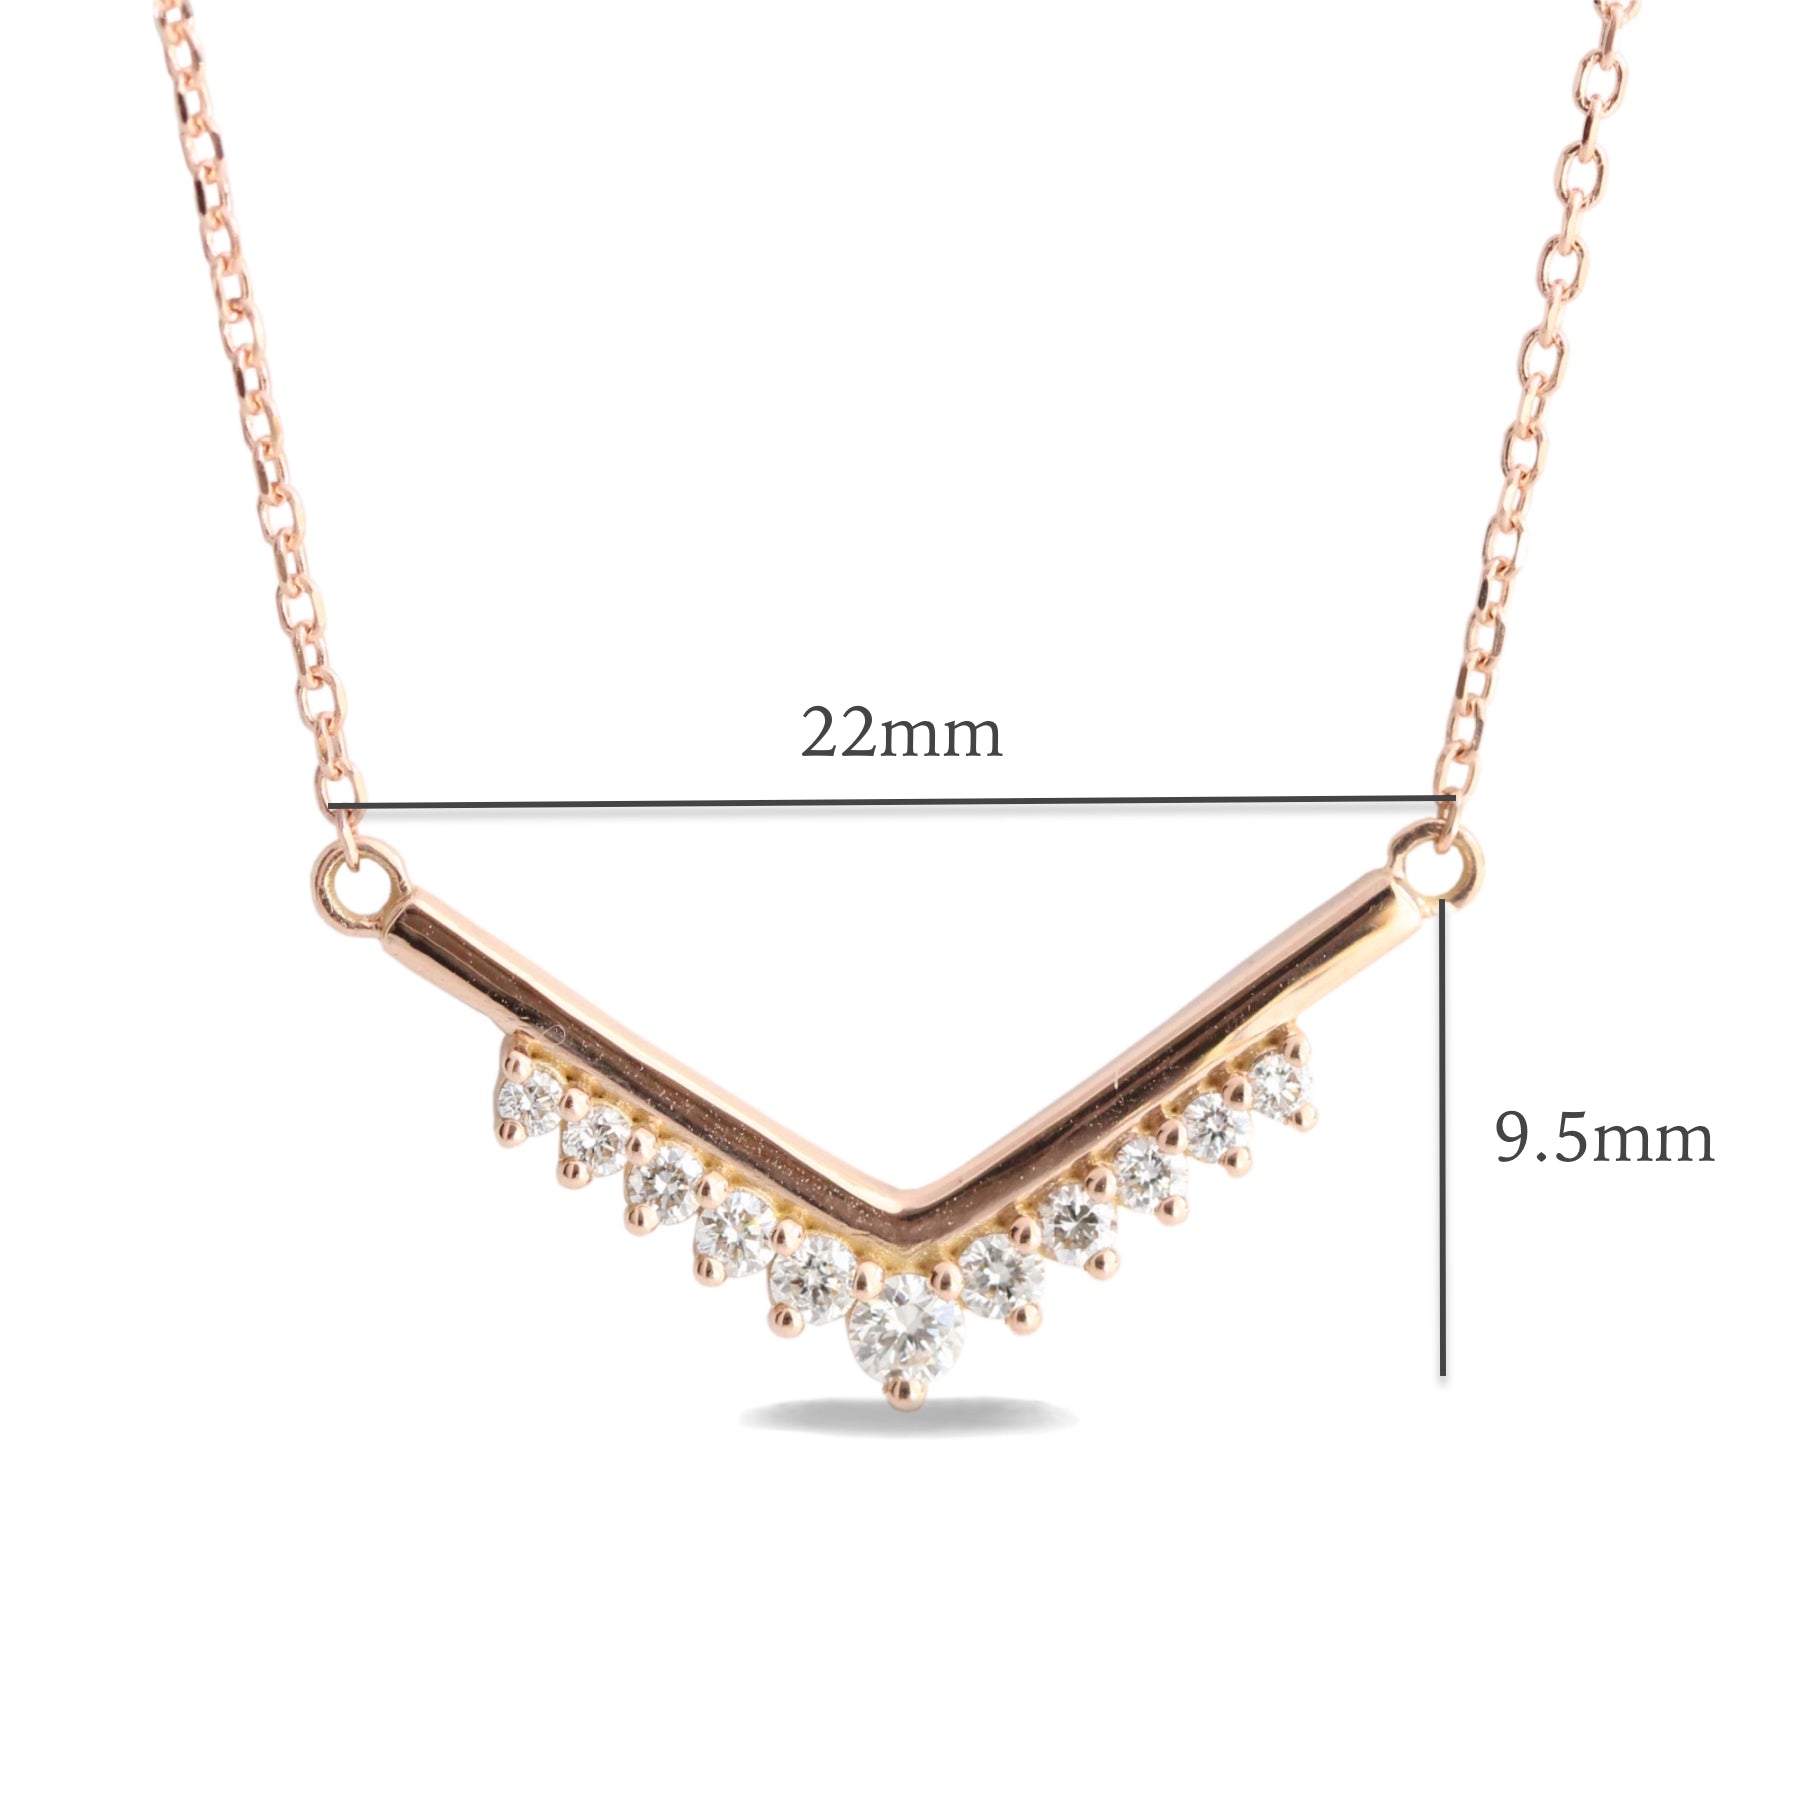 14K Yellow Gold V-Shaped Diamond Necklace